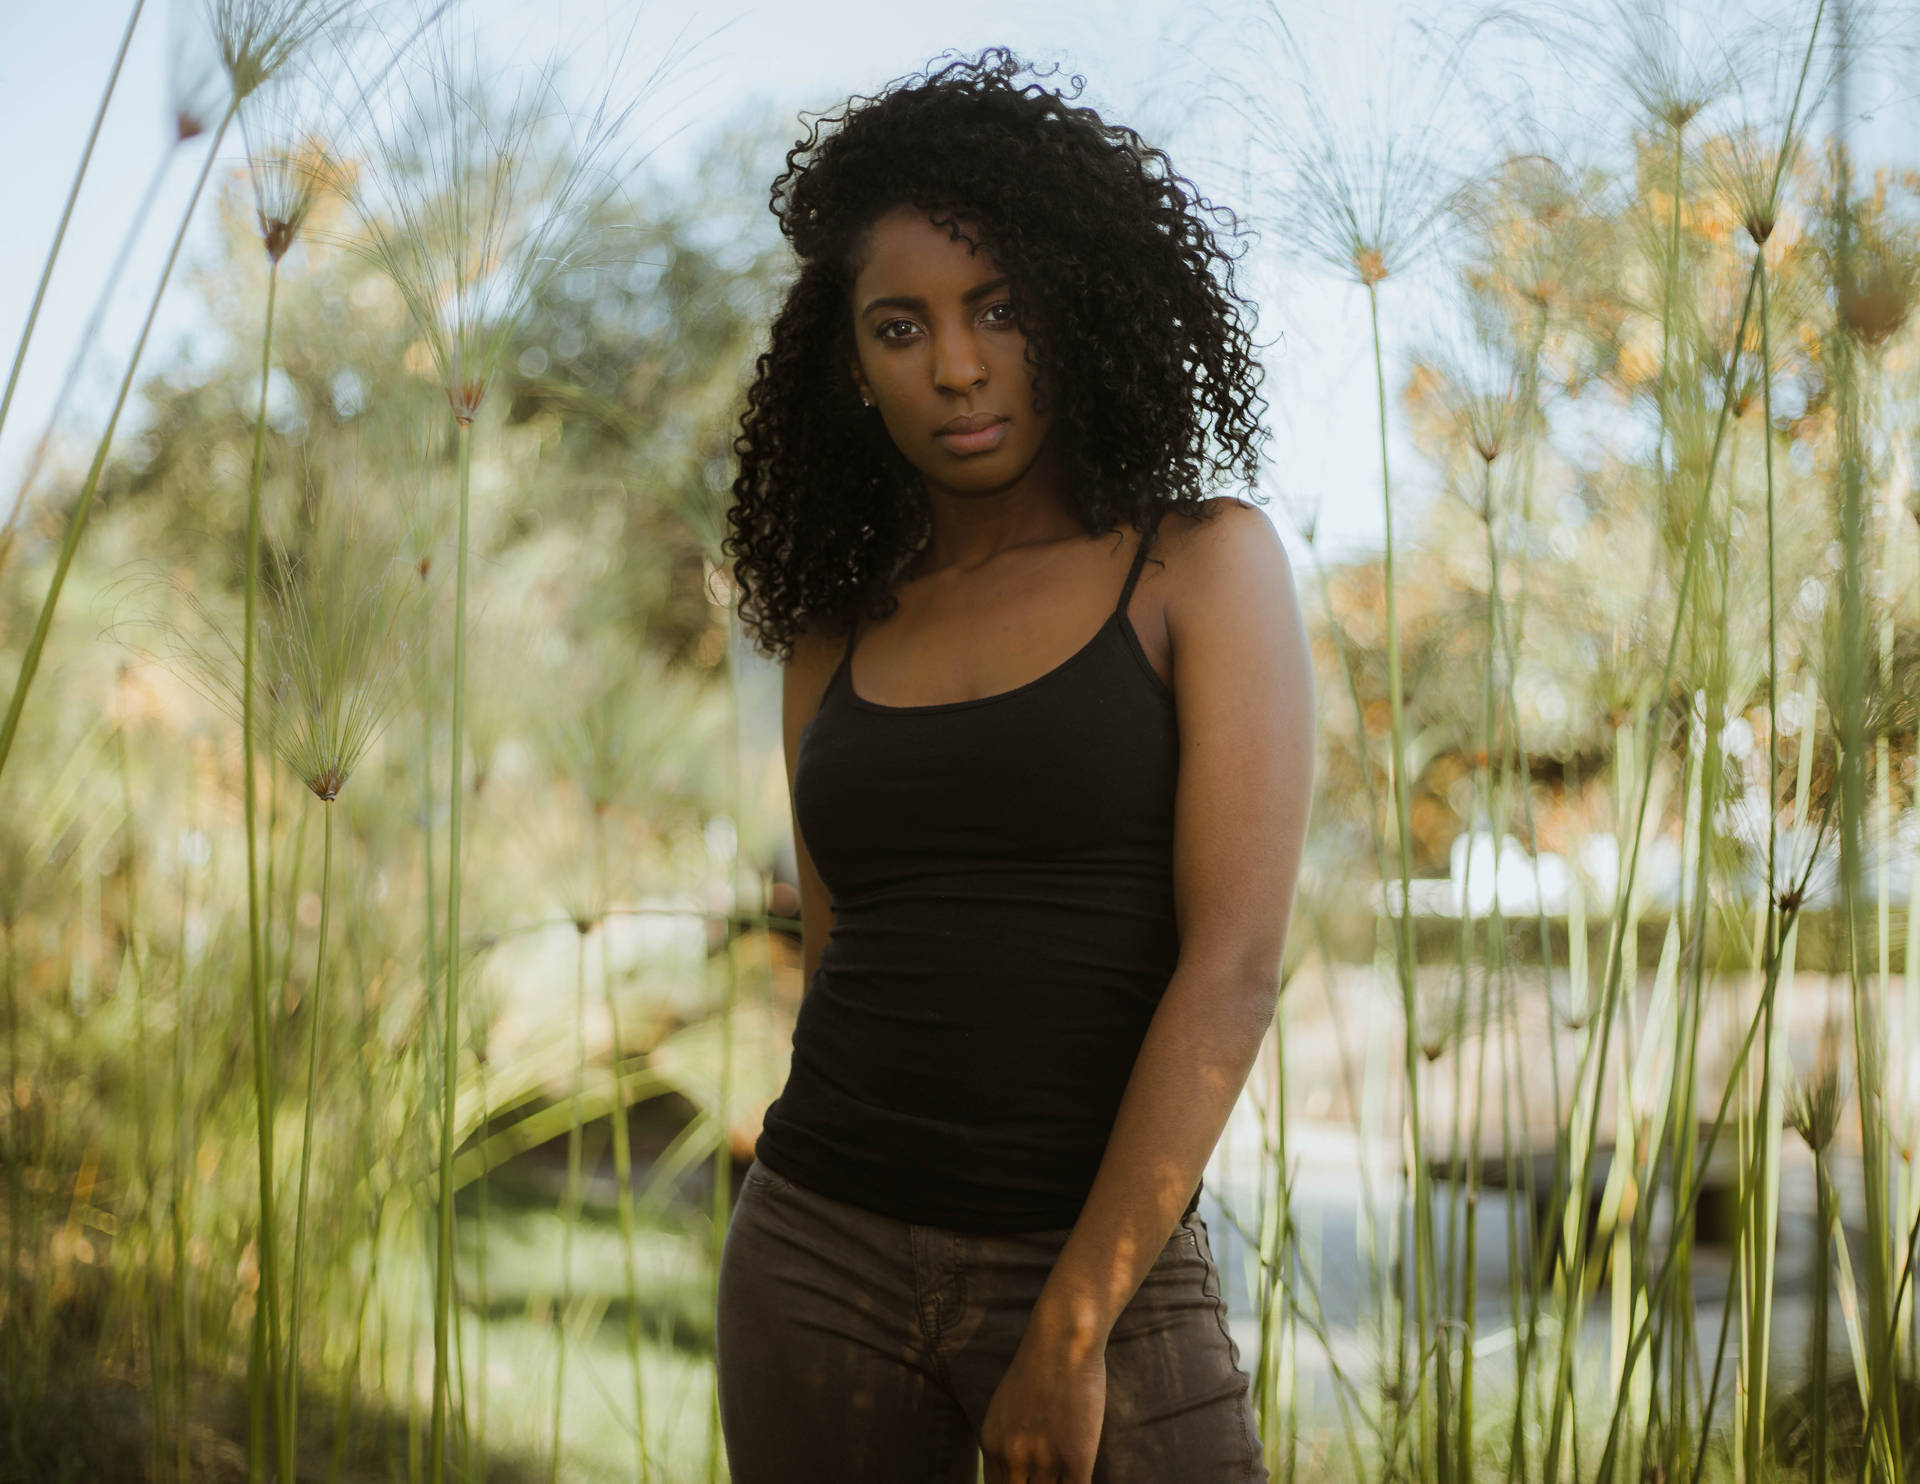 Caption: Radiant Confidence - Portrait Of A Beautiful Black Girl